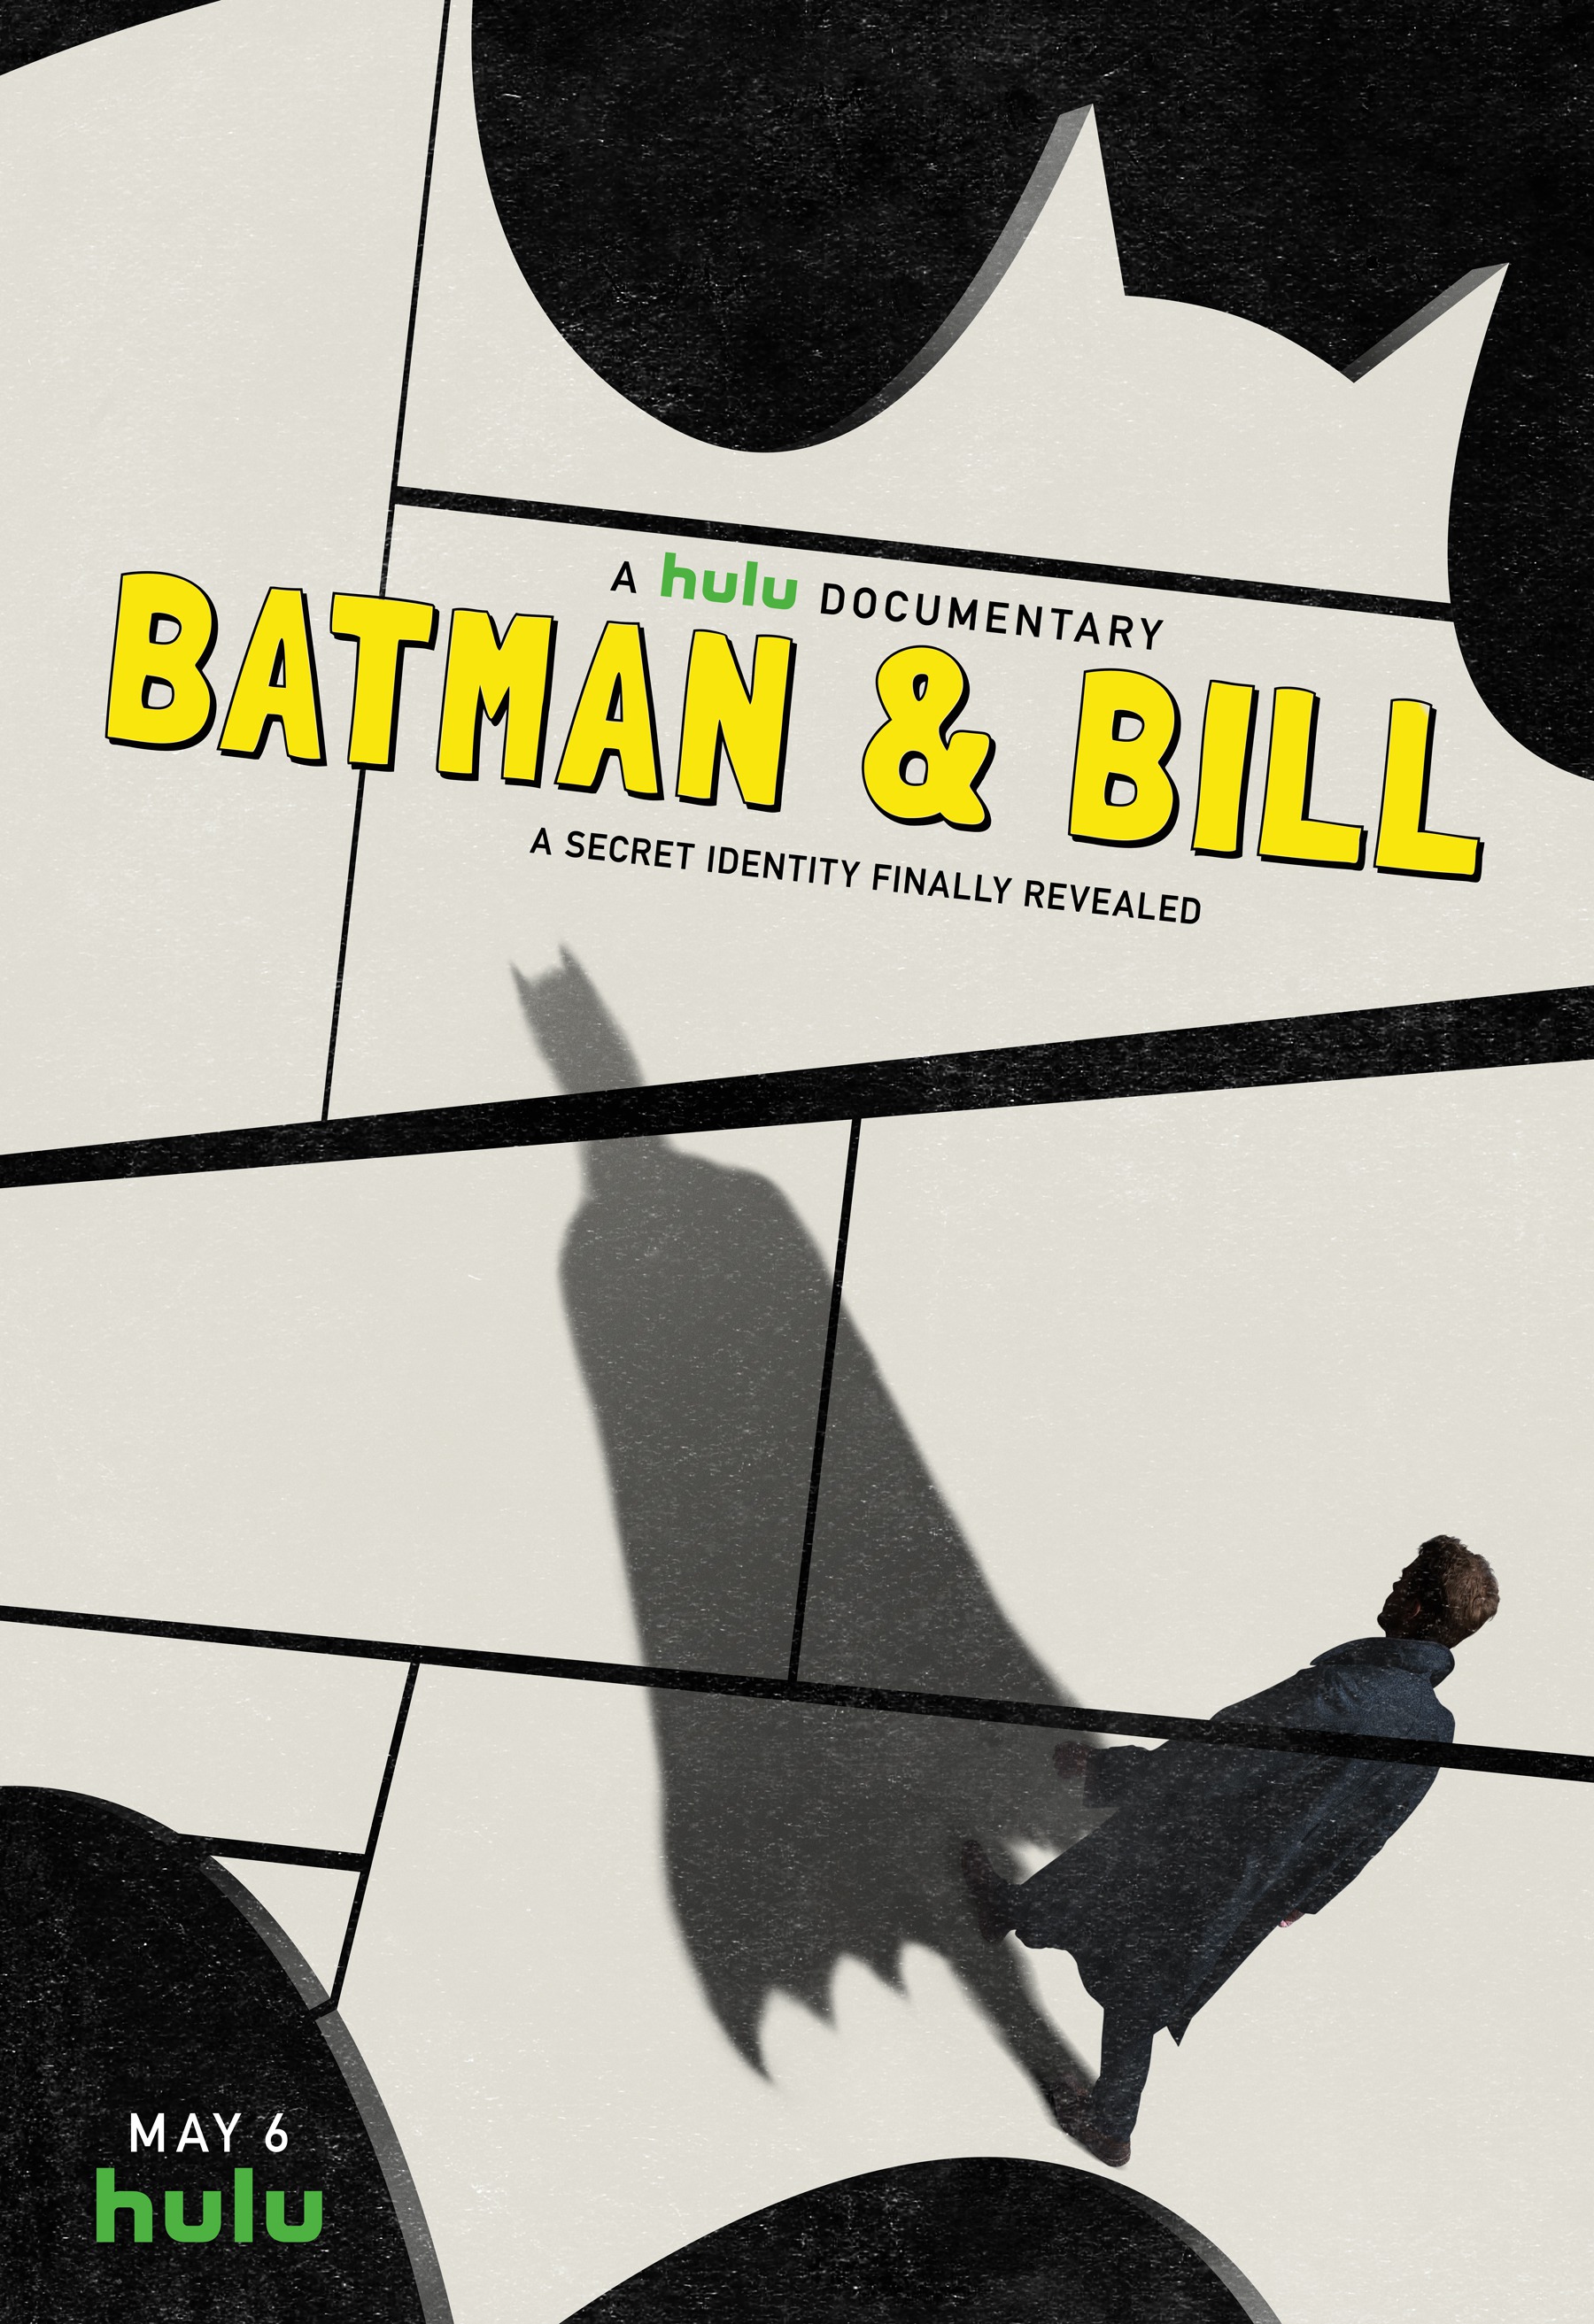 Mega Sized TV Poster Image for Batman & Bill 